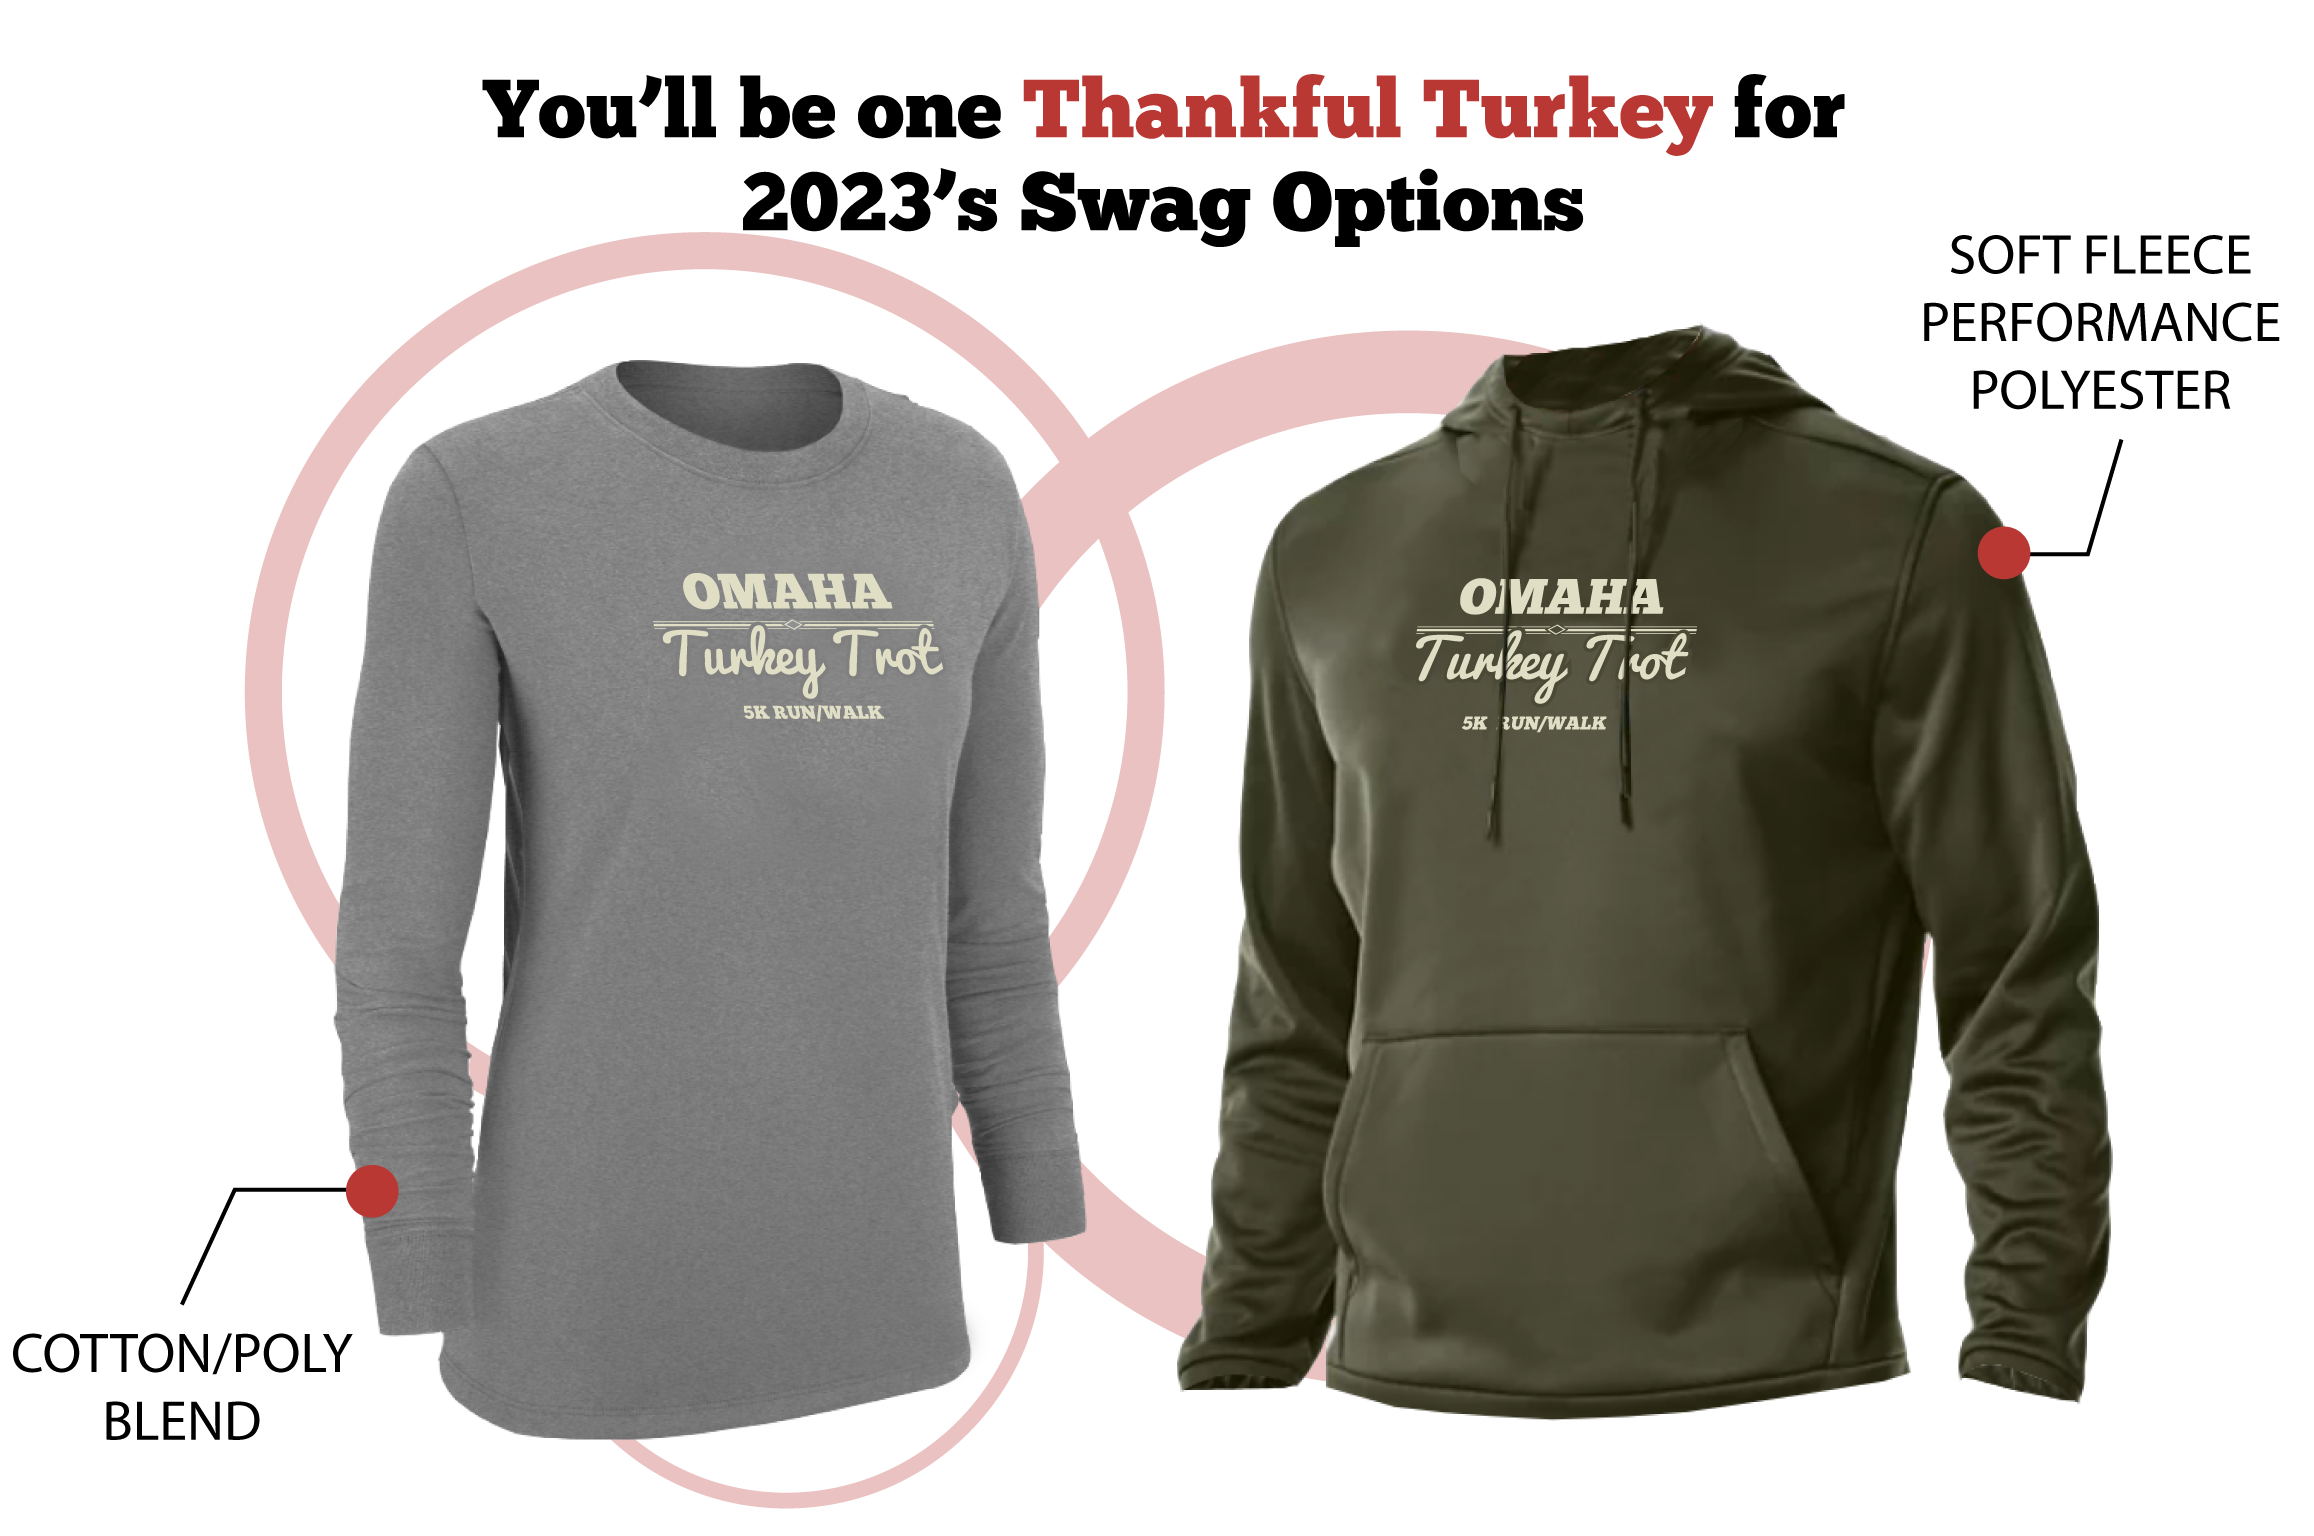 Omaha Turkey Trot 5K